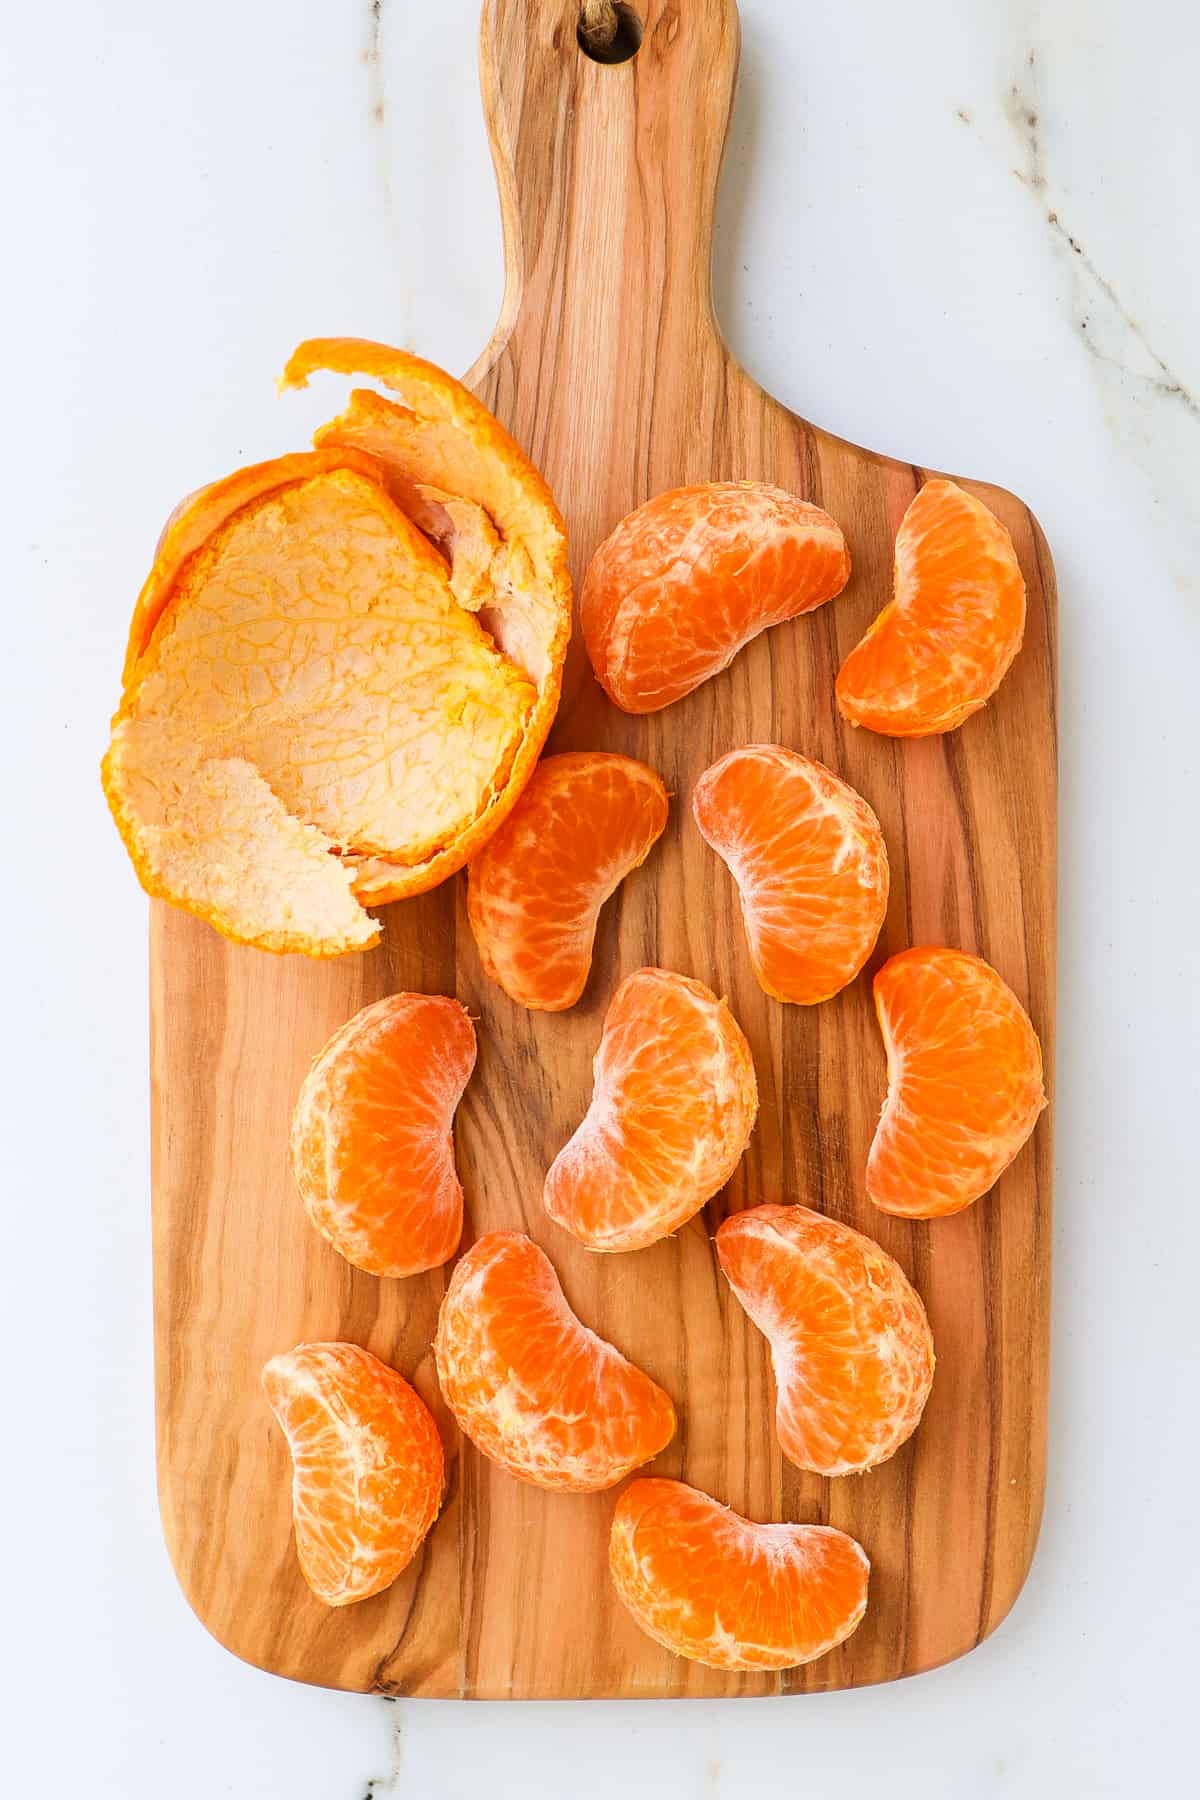 Mandarin orange segments on a wooden cutting board.